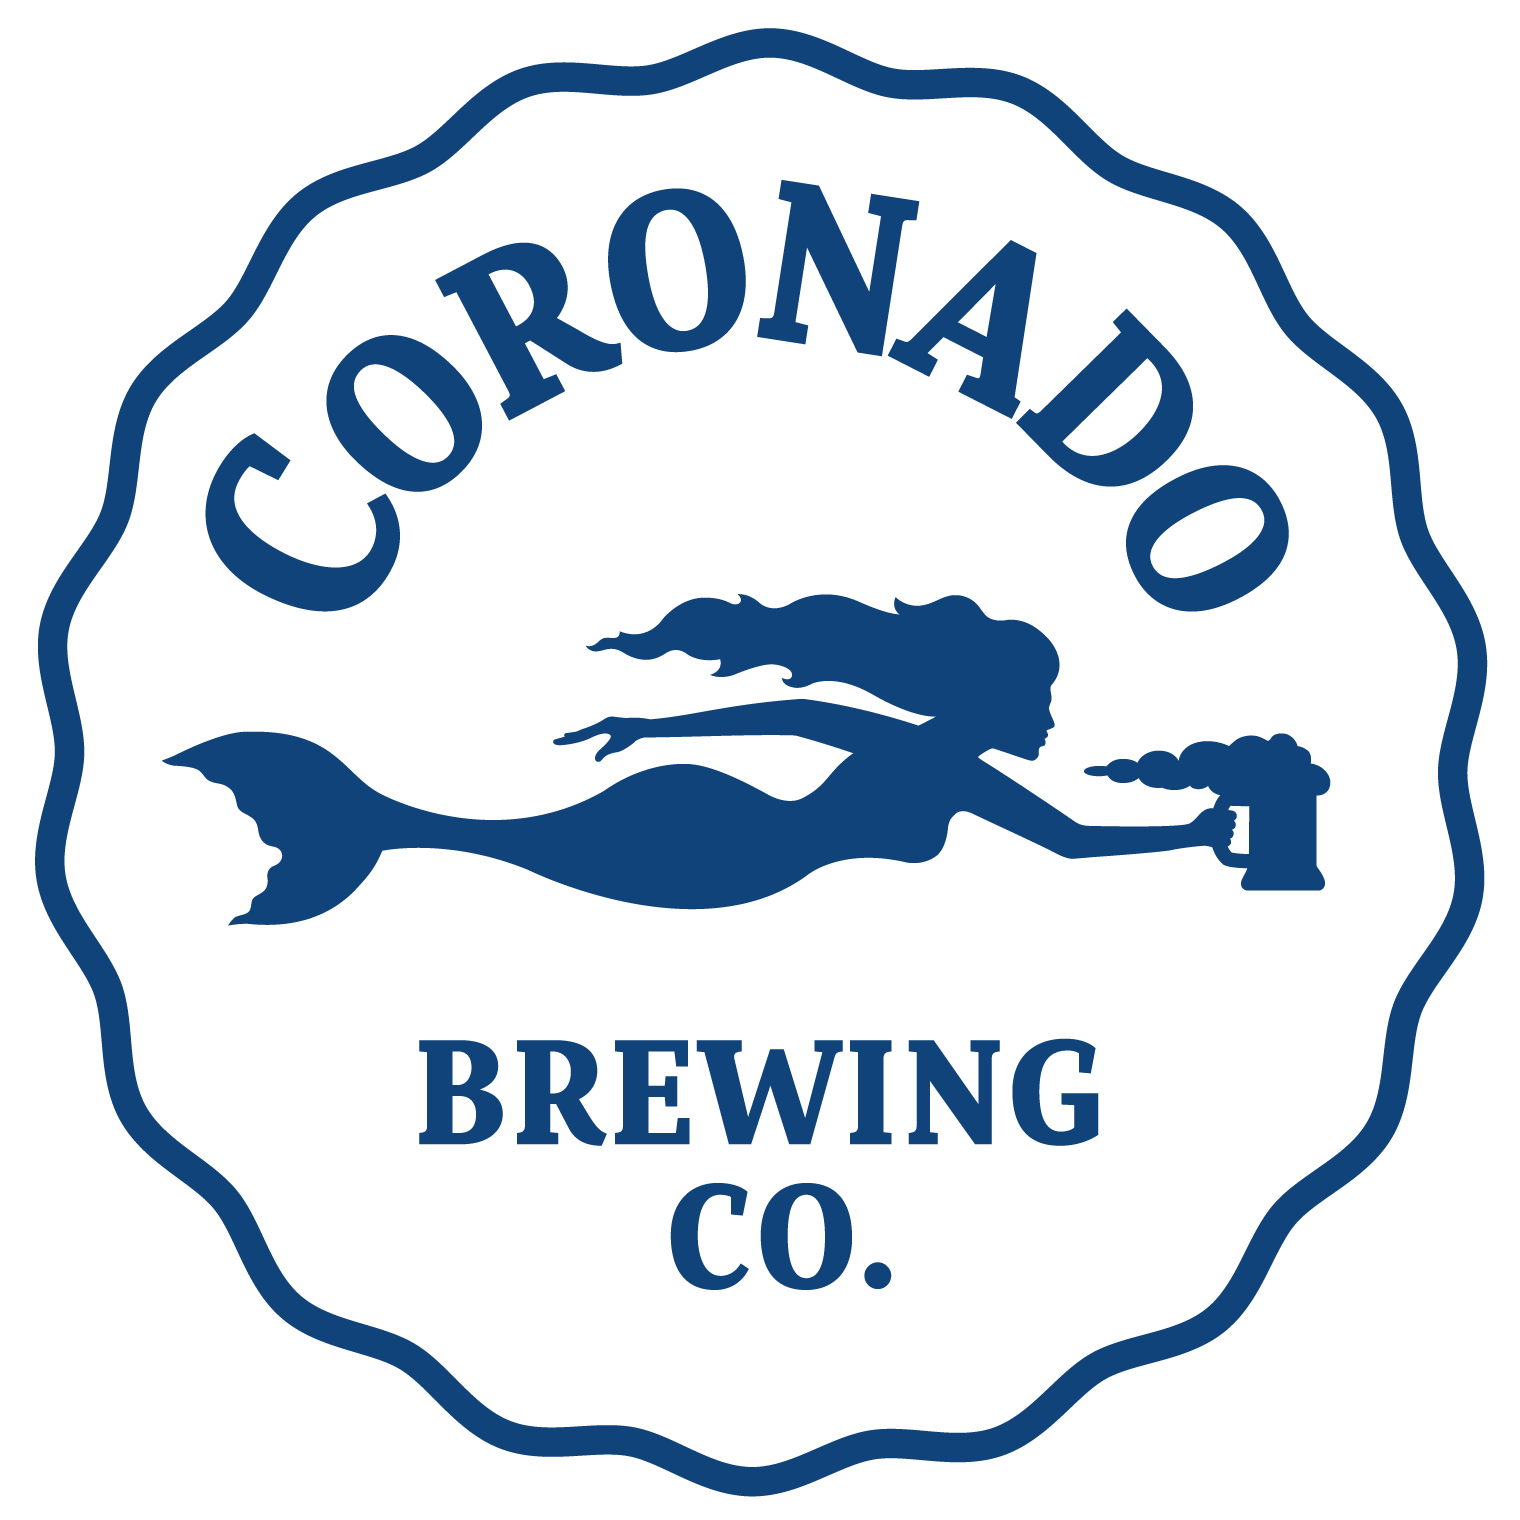 CoronadoBrewingCo_Scallop Logo RGB_300DPI